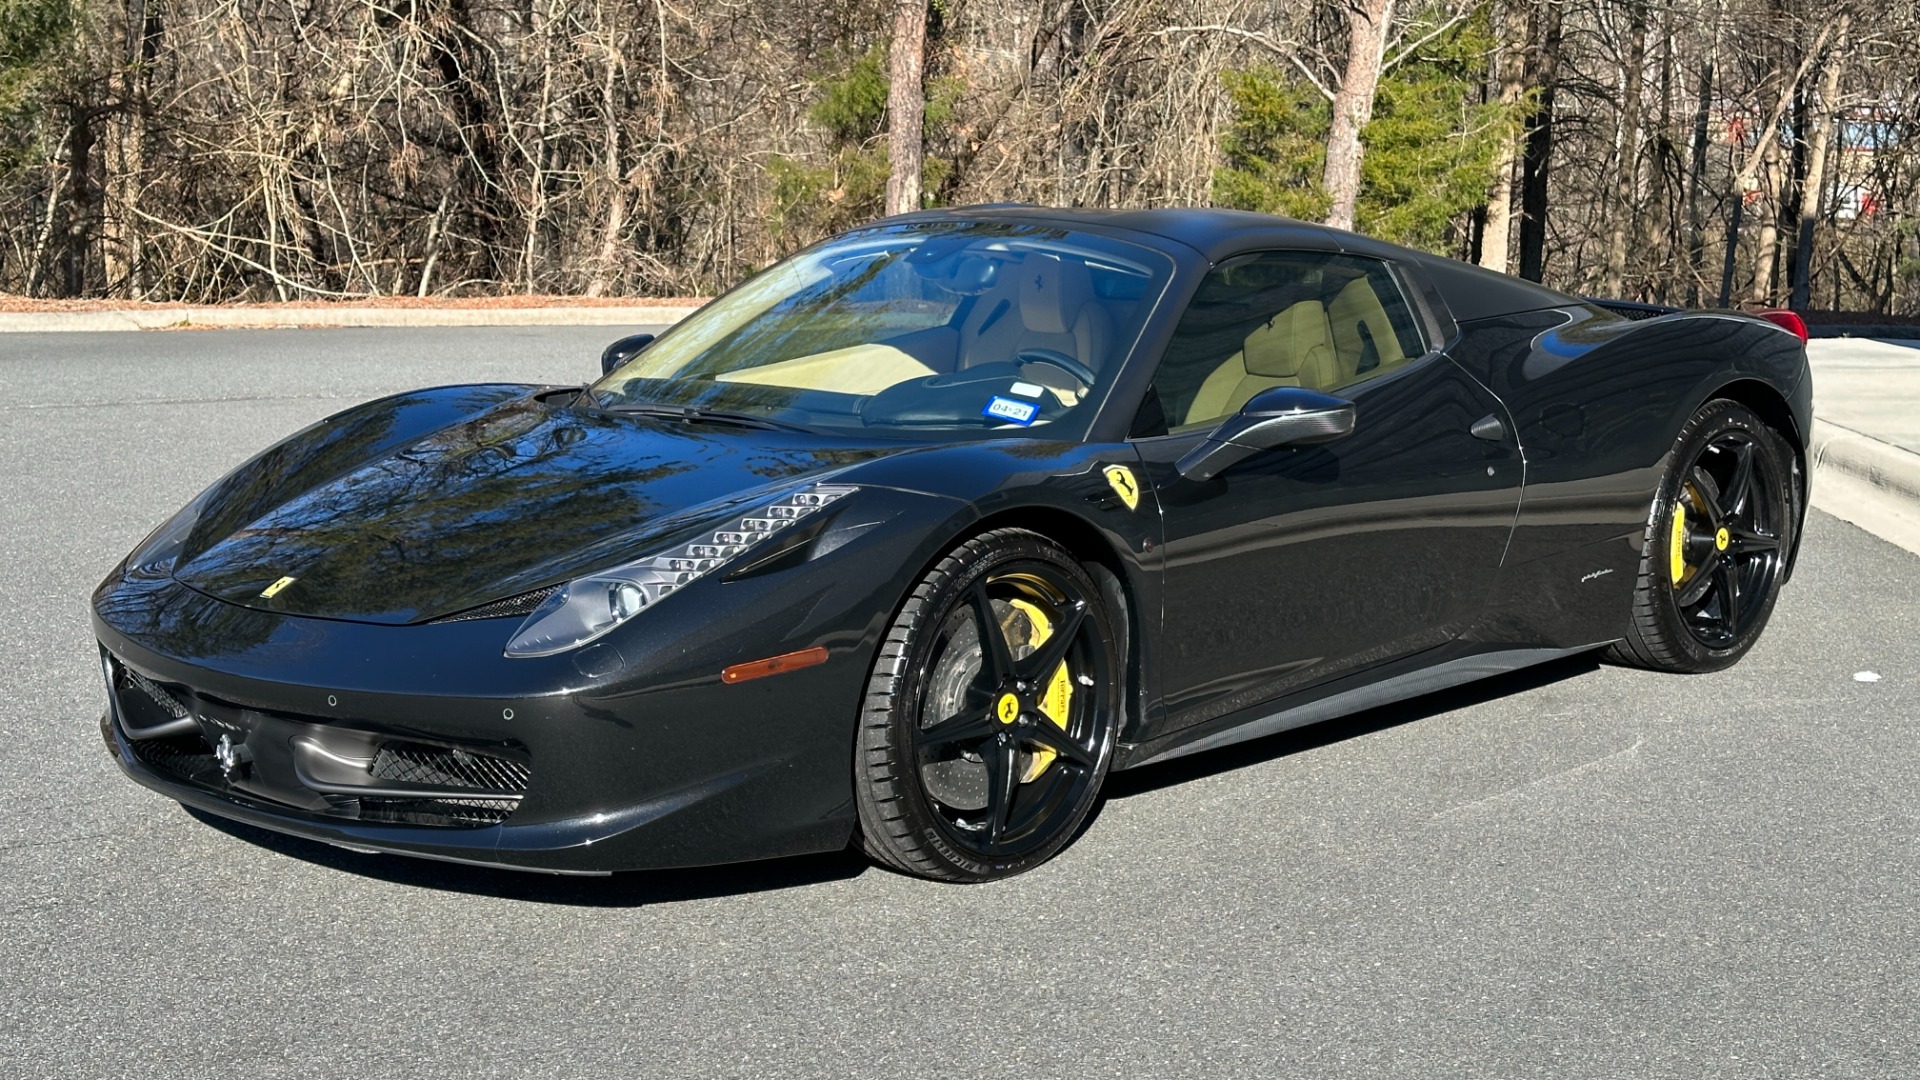 Used 2014 Ferrari 458 ITALIA SPIDER DAYTONA SEATS / CARBON FIBER / F1 LED STEERING / V8 / FRONT LIFT for sale $227,000 at Formula Imports in Charlotte NC 28227 2